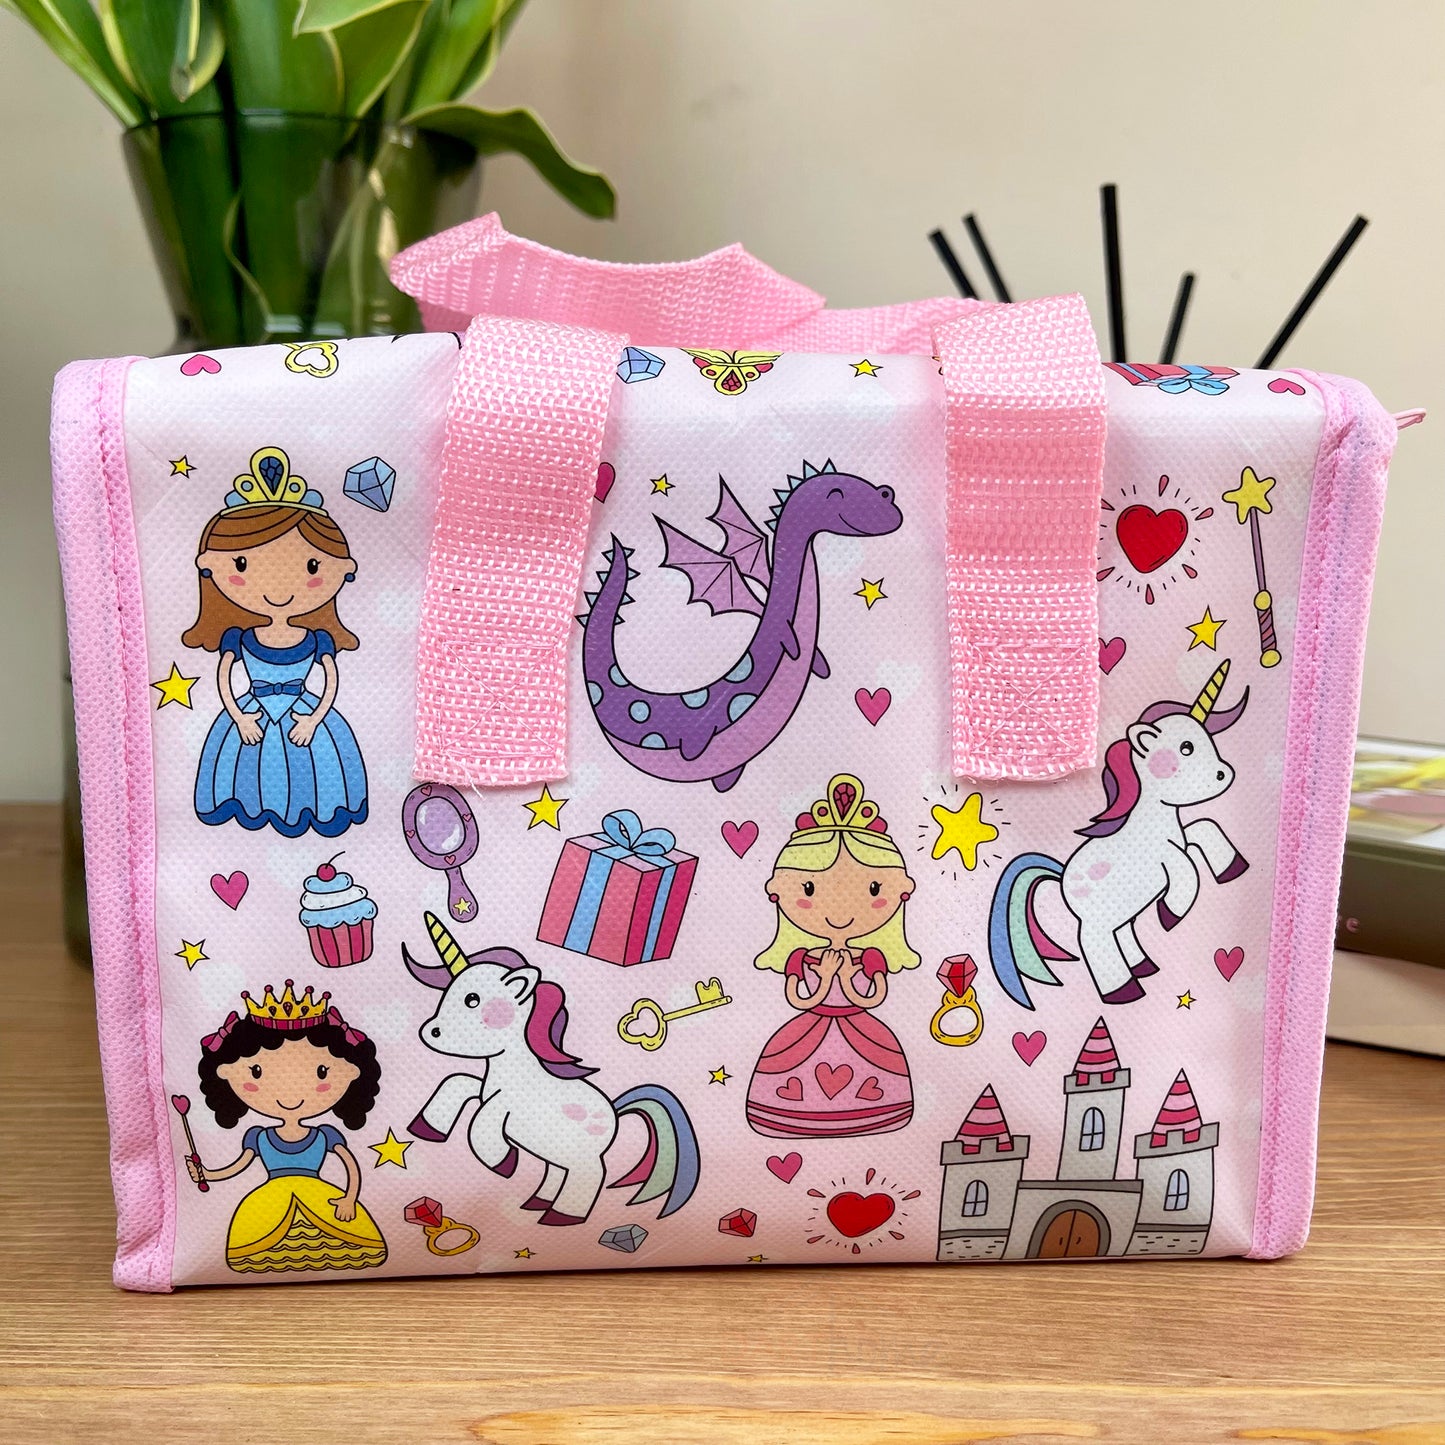 Fairytale Insulated Lunch Bag